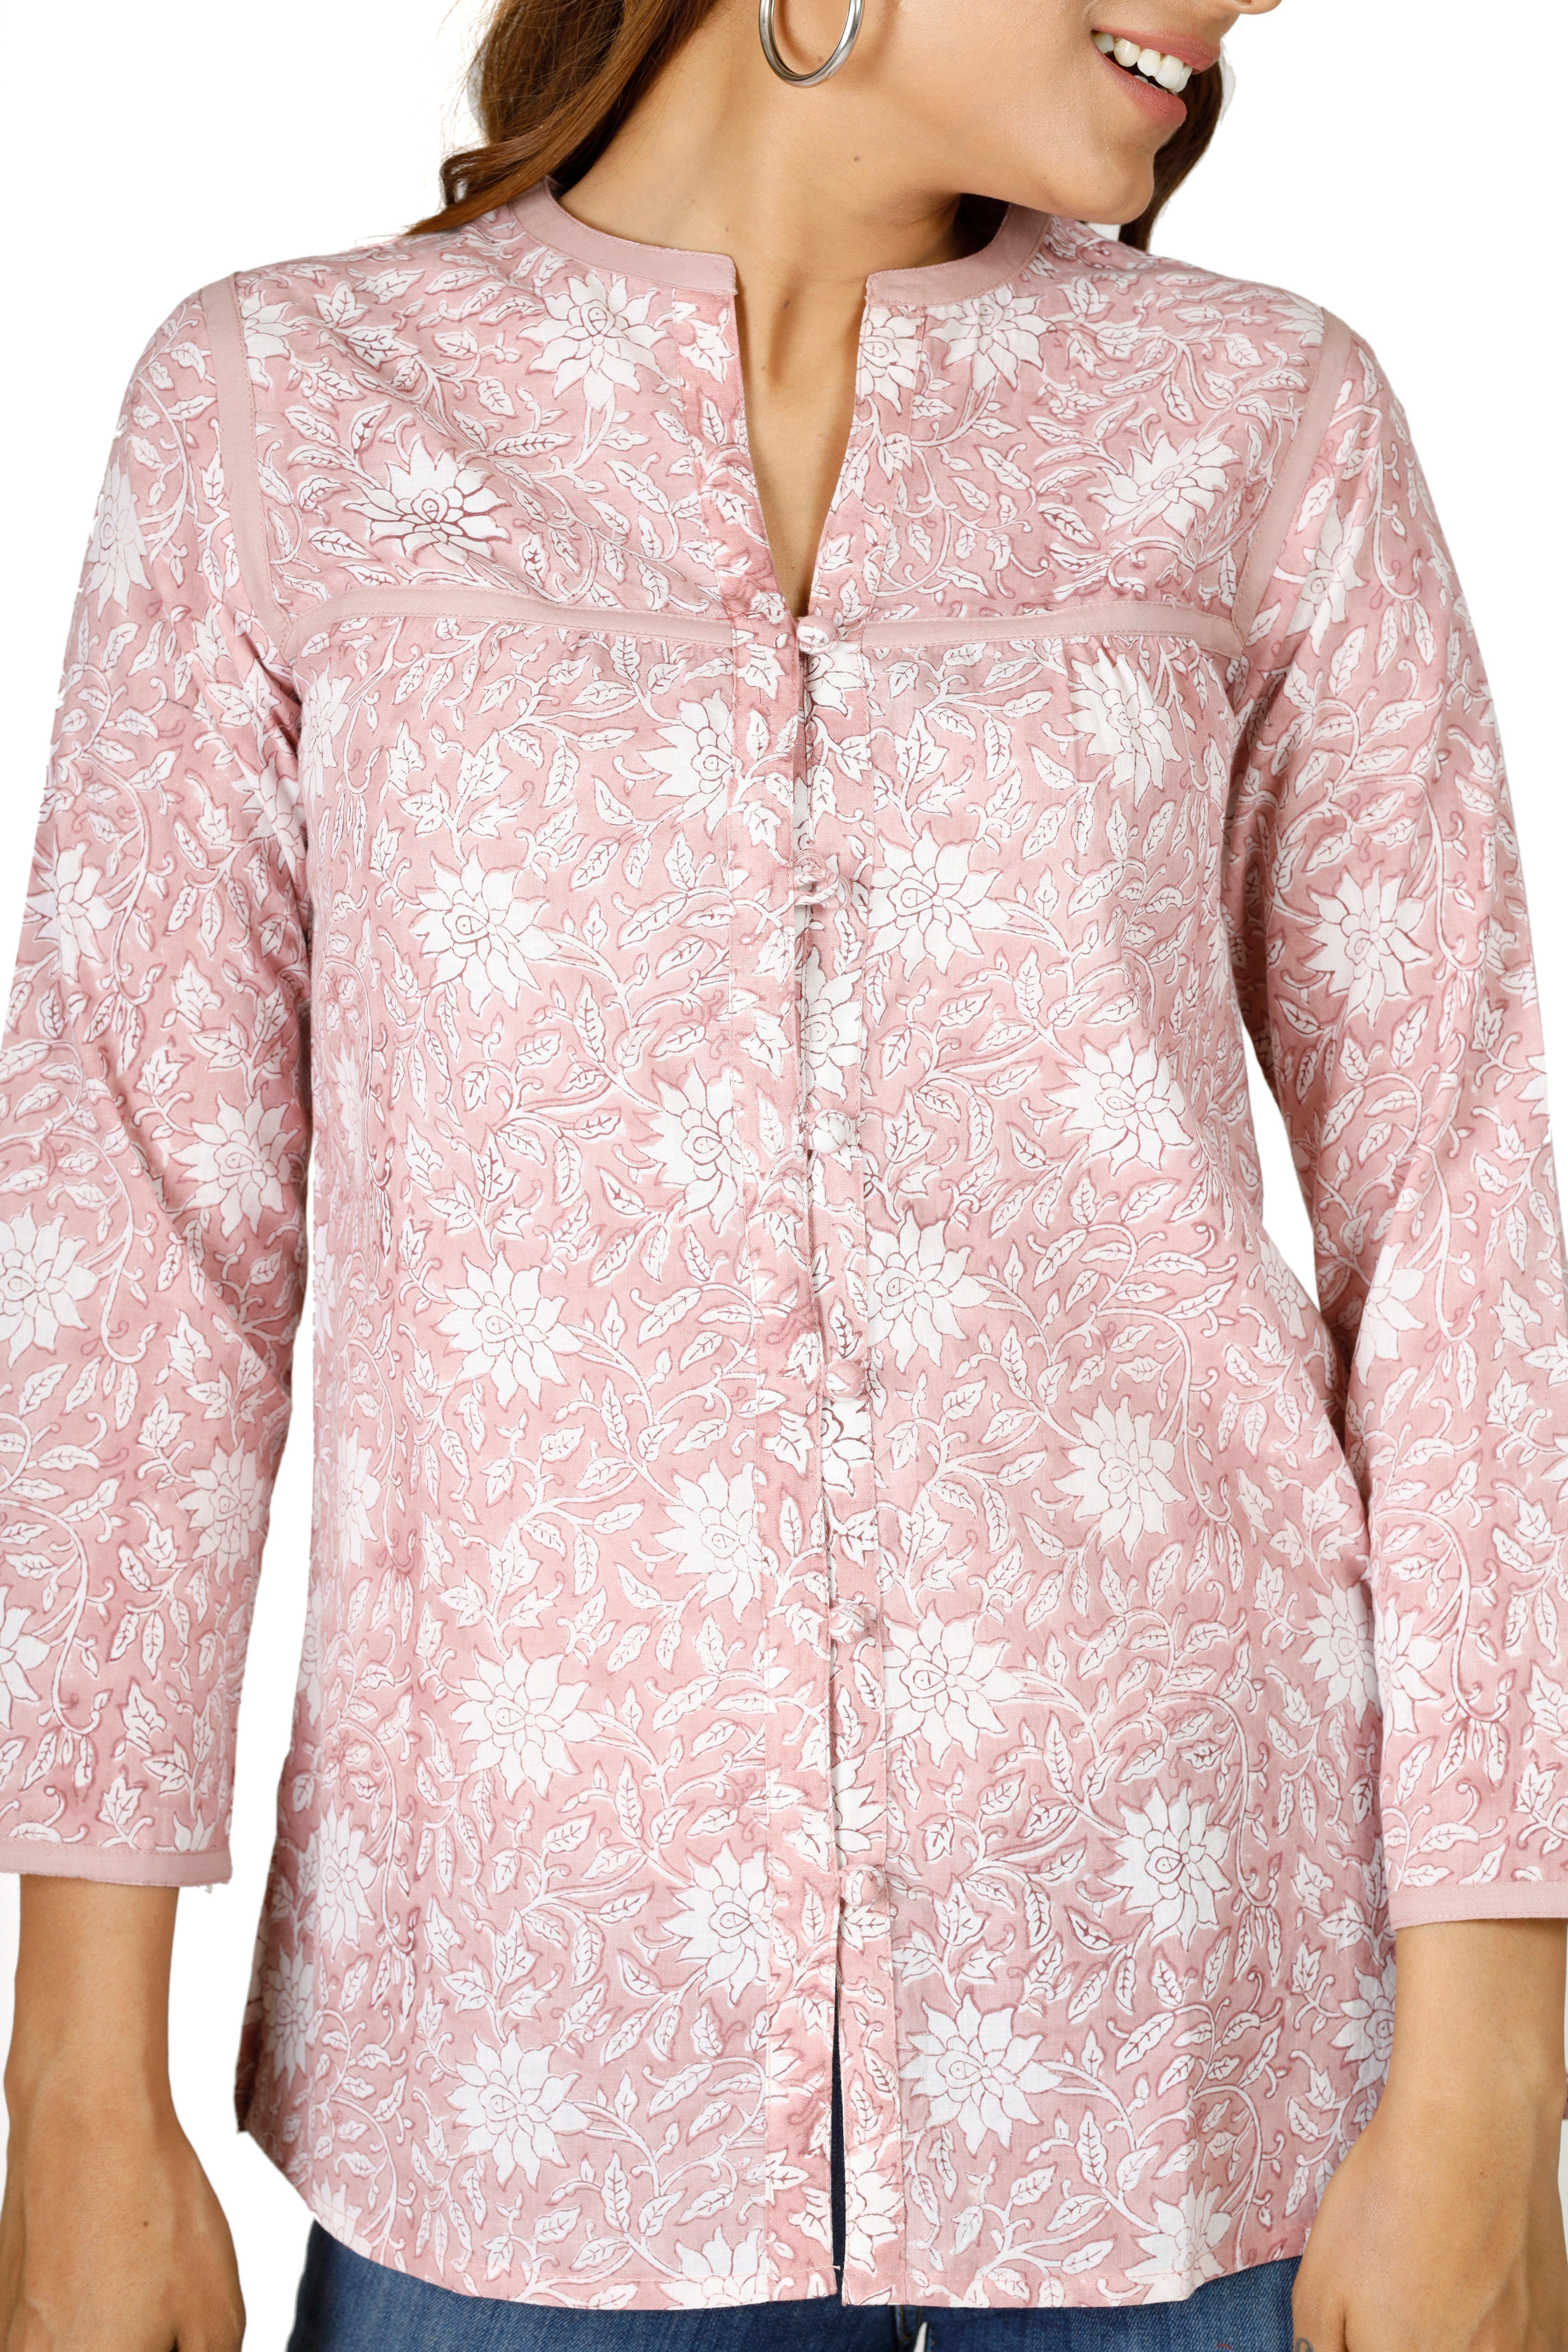 Guru-Shop alternative Bekleidung Baumwollbluse.. Handbedruckte rosa Longbluse Bohobluse, luftige